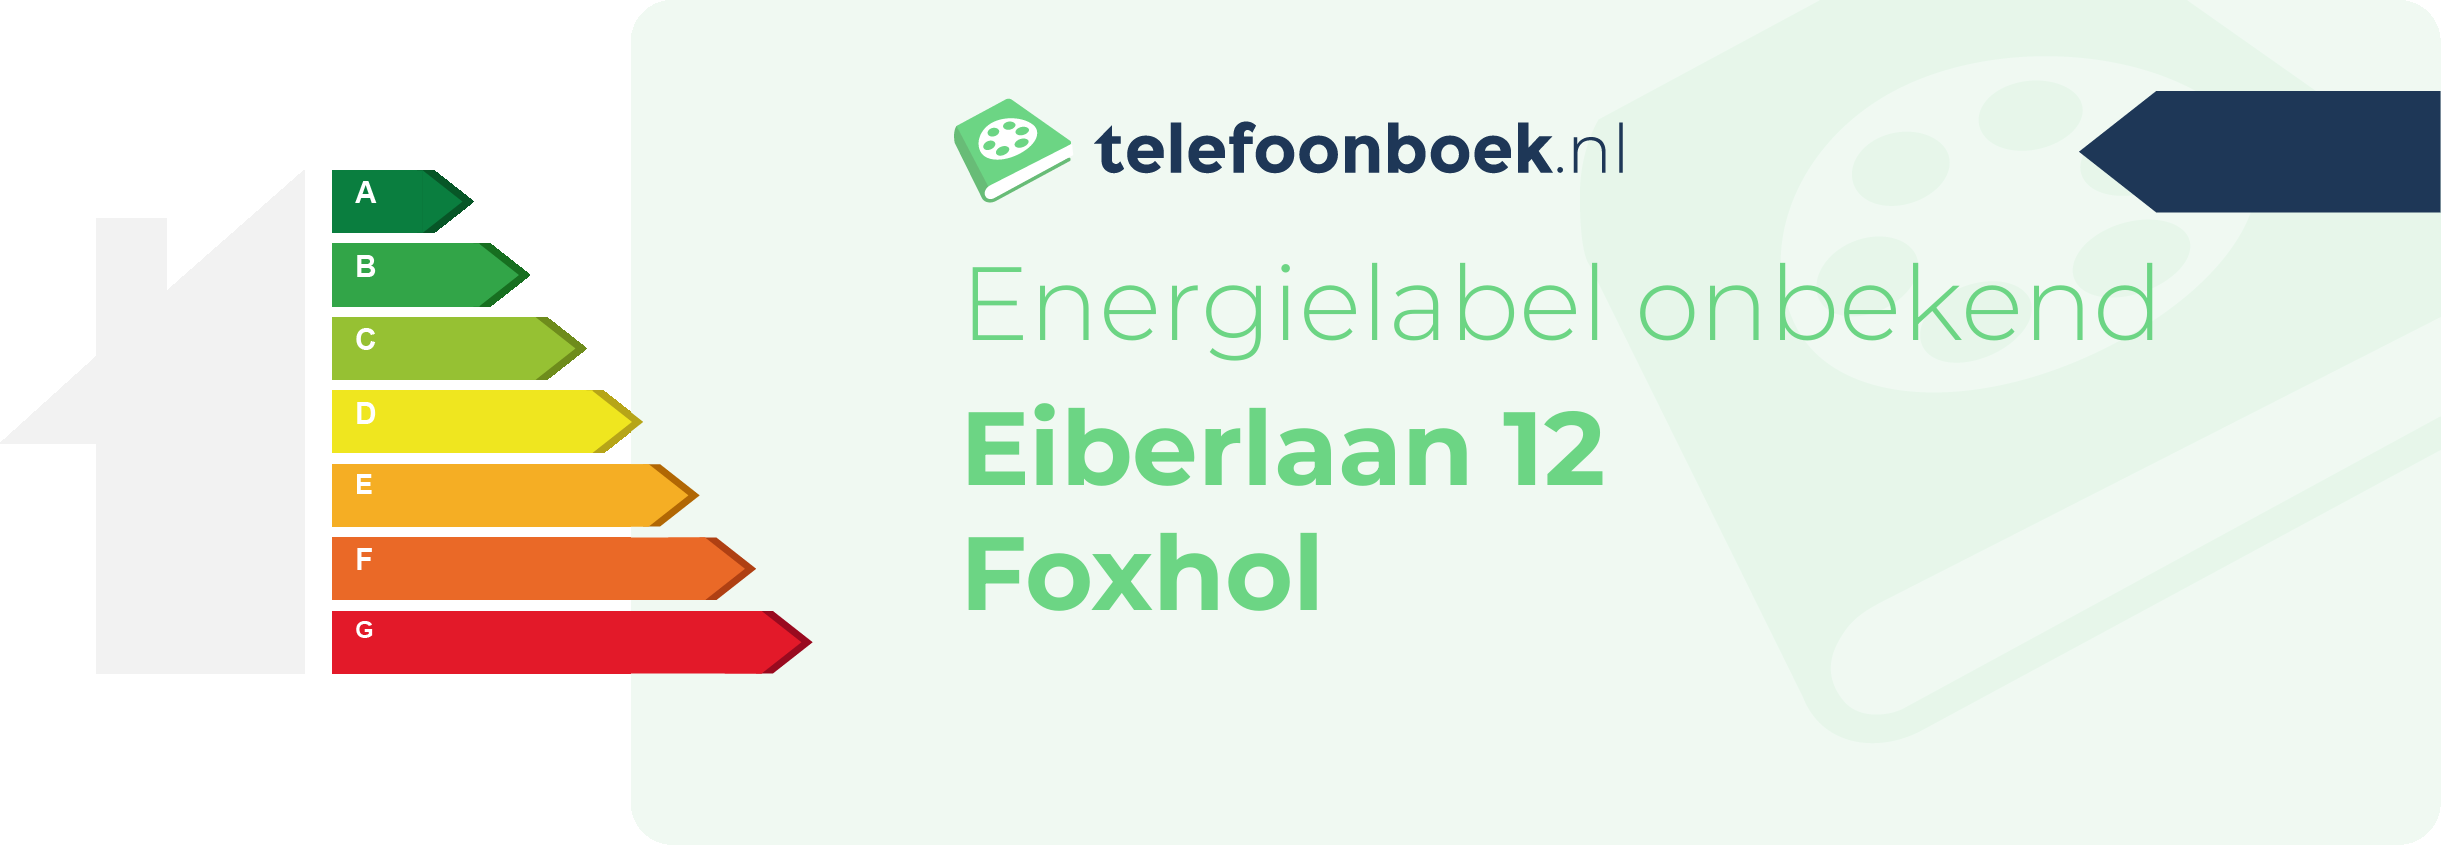 Energielabel Eiberlaan 12 Foxhol